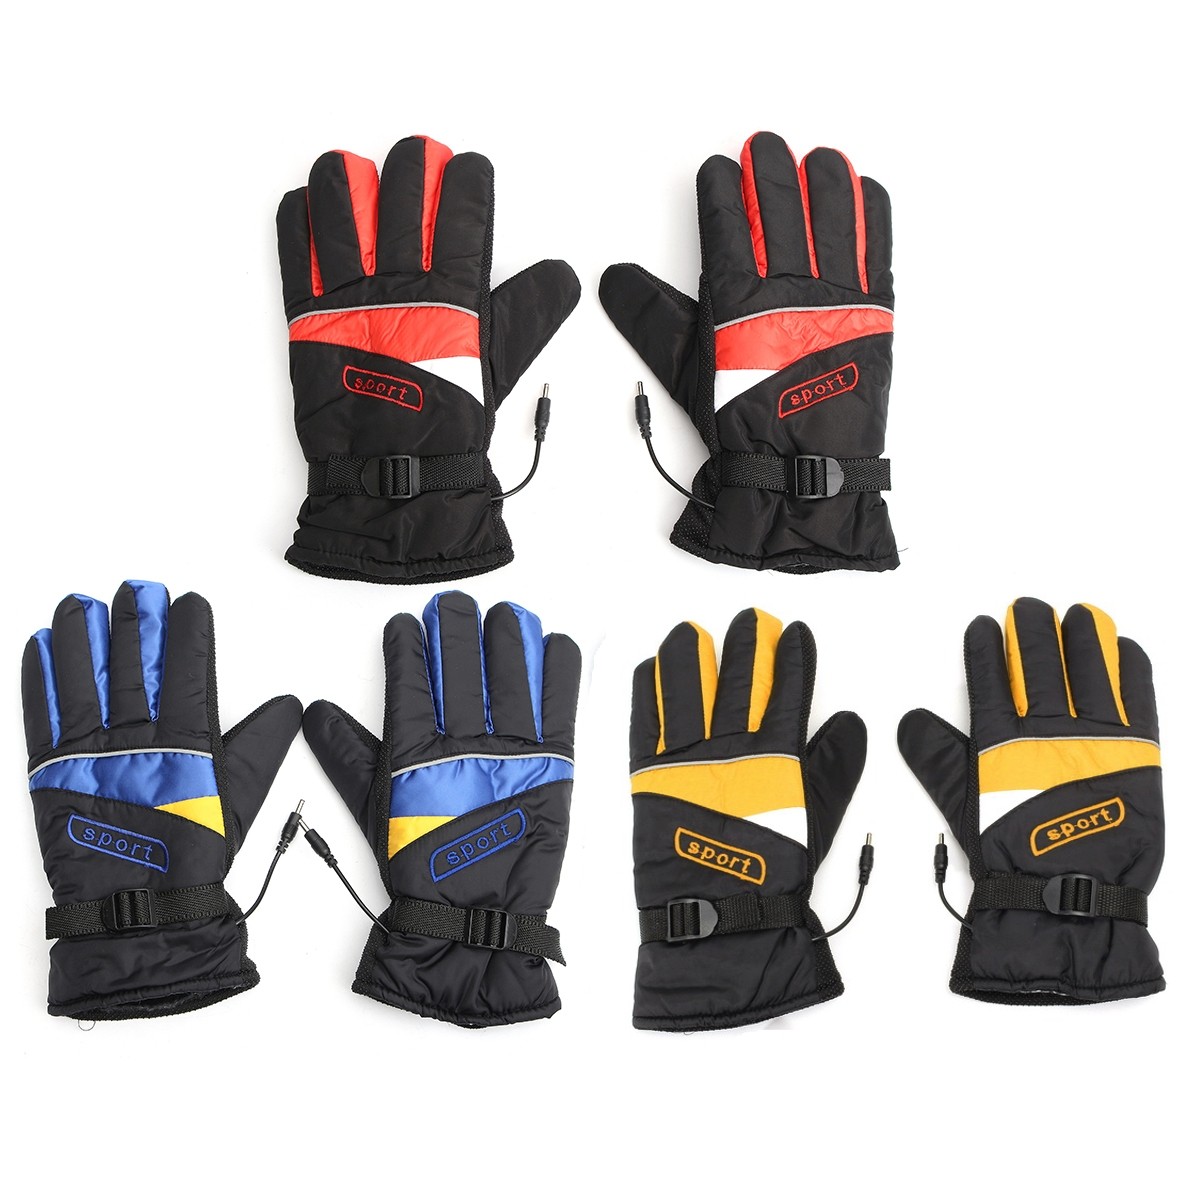 12V48V60V-Waterproof-Electric-Heated-Gloves-Winter-Inner-Warmer-Motorcycle-Ski-Racing-1107738